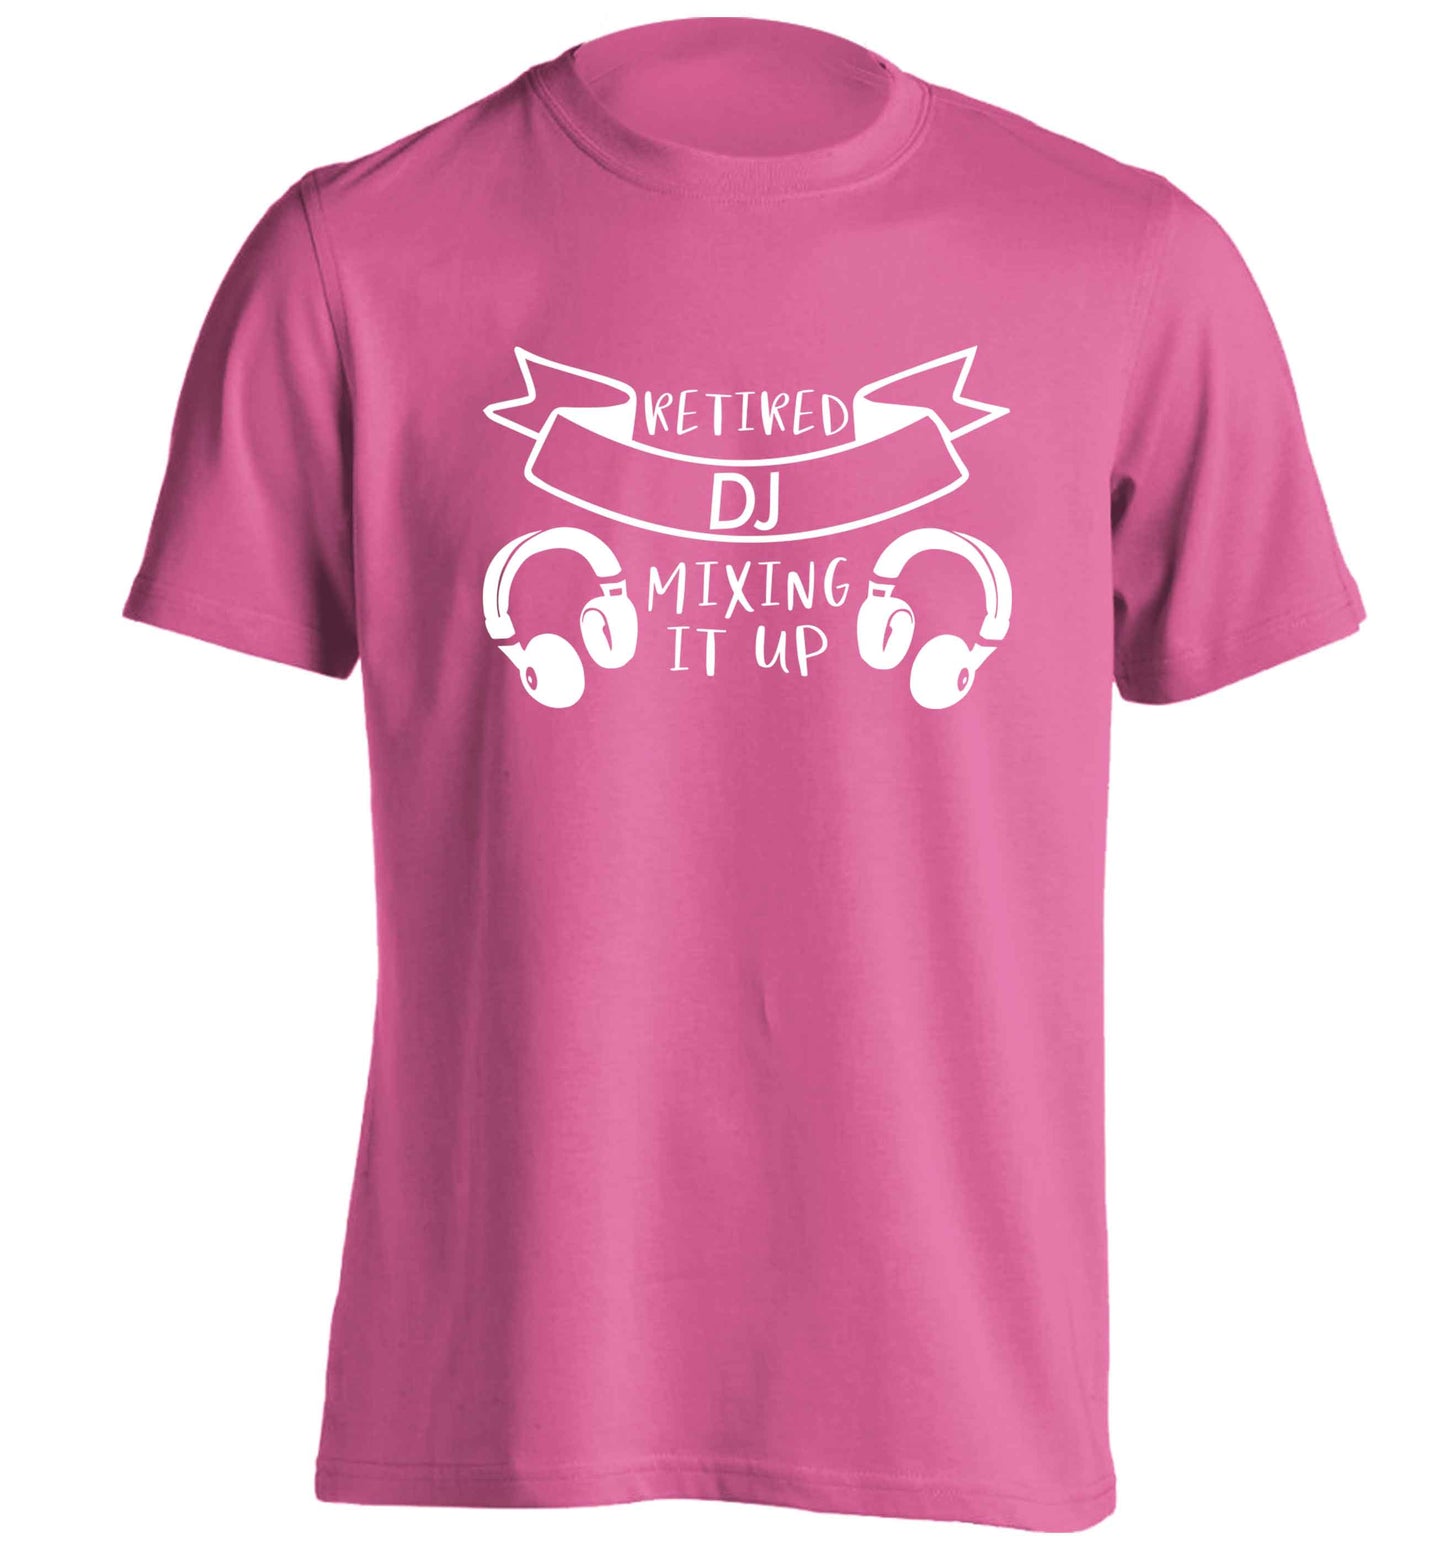 Retired DJ mixing it up adults unisex pink Tshirt 2XL